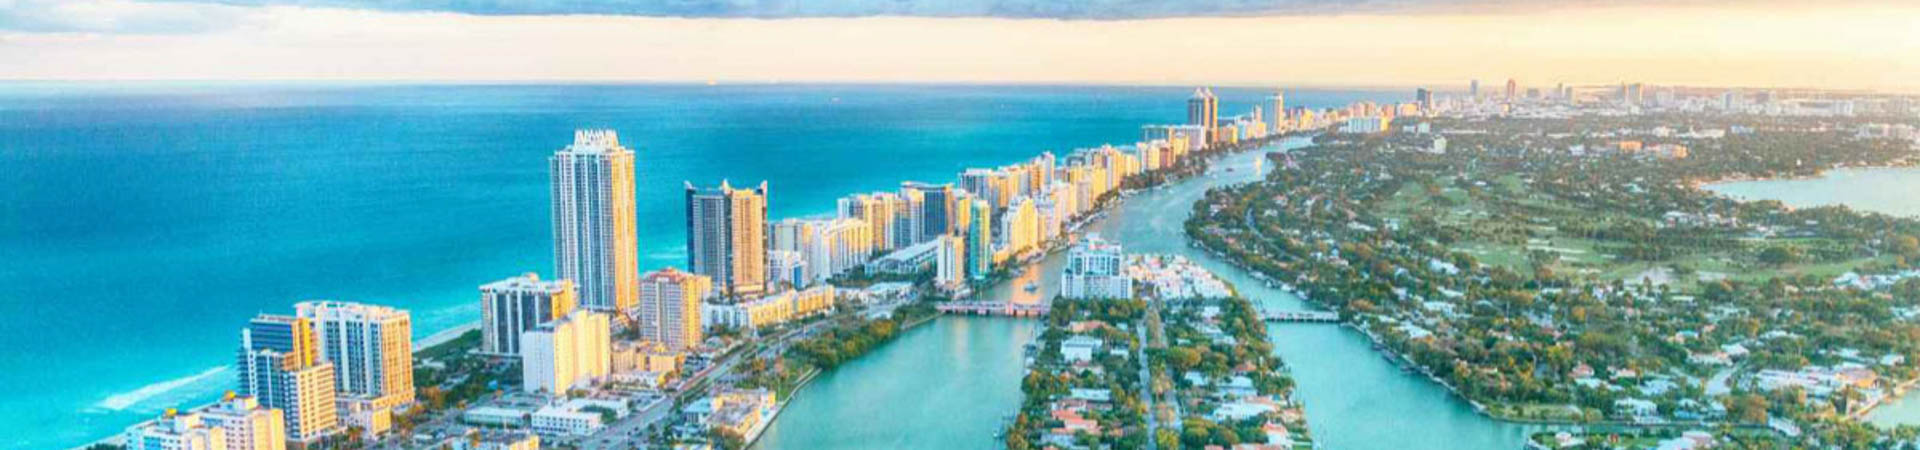 Miami coast line day aerial